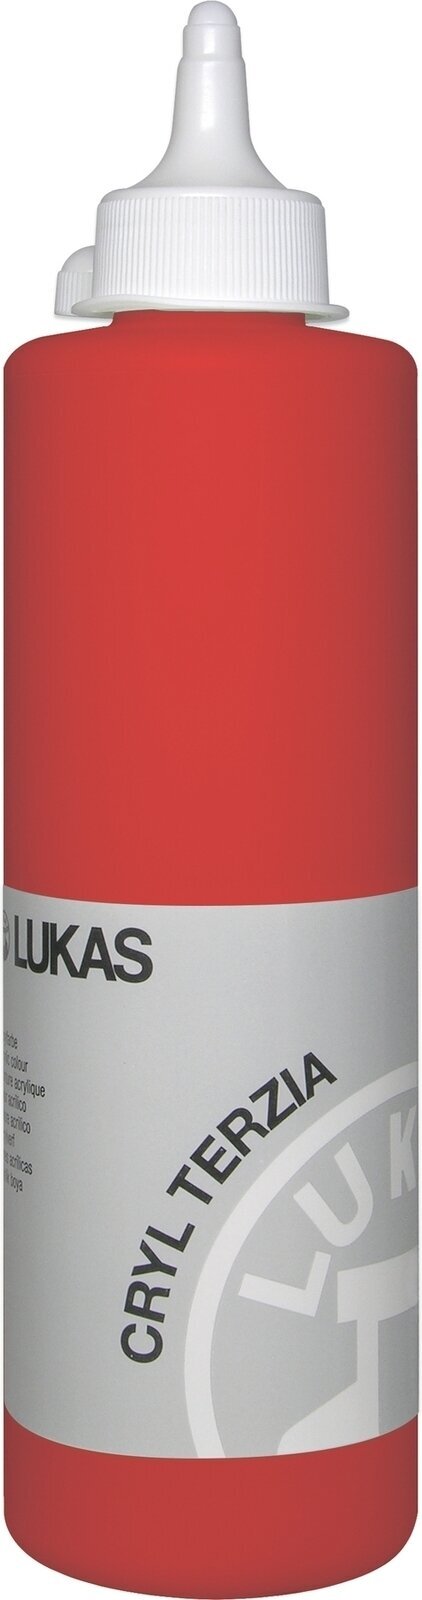 Acrylfarbe Lukas Cryl Terzia Acrylfarbe 500 ml Cadmium Red Light Hue